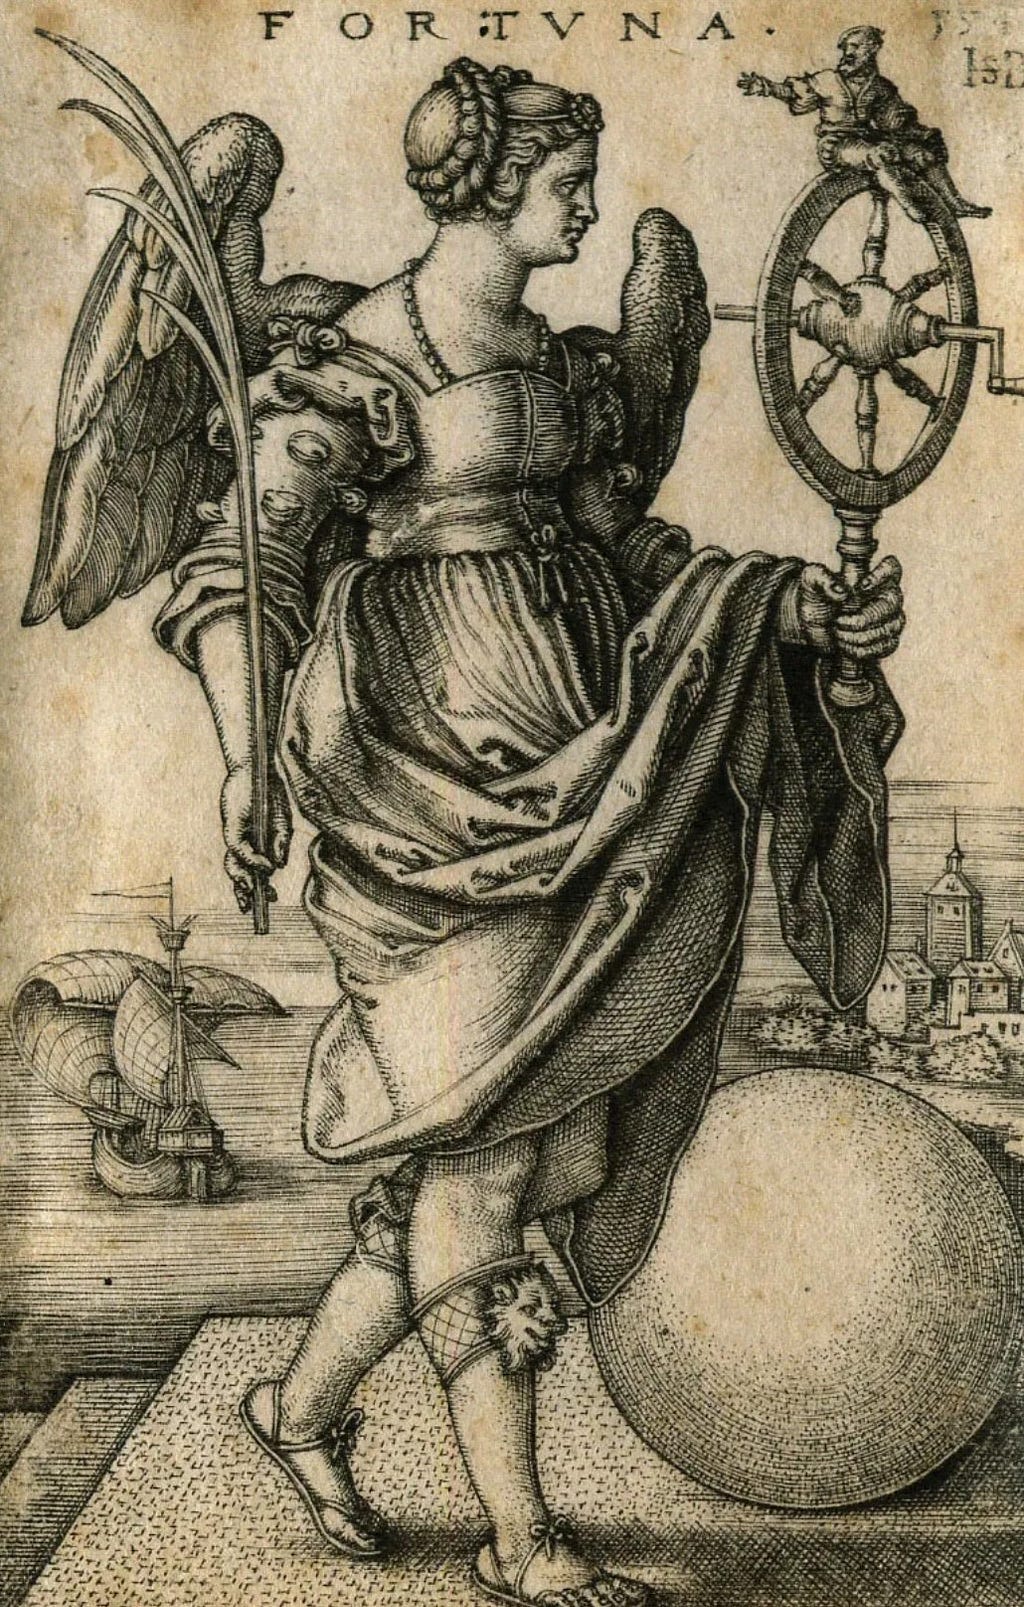 Fortuna, engraving by Hans Sebald Beham, 1541.